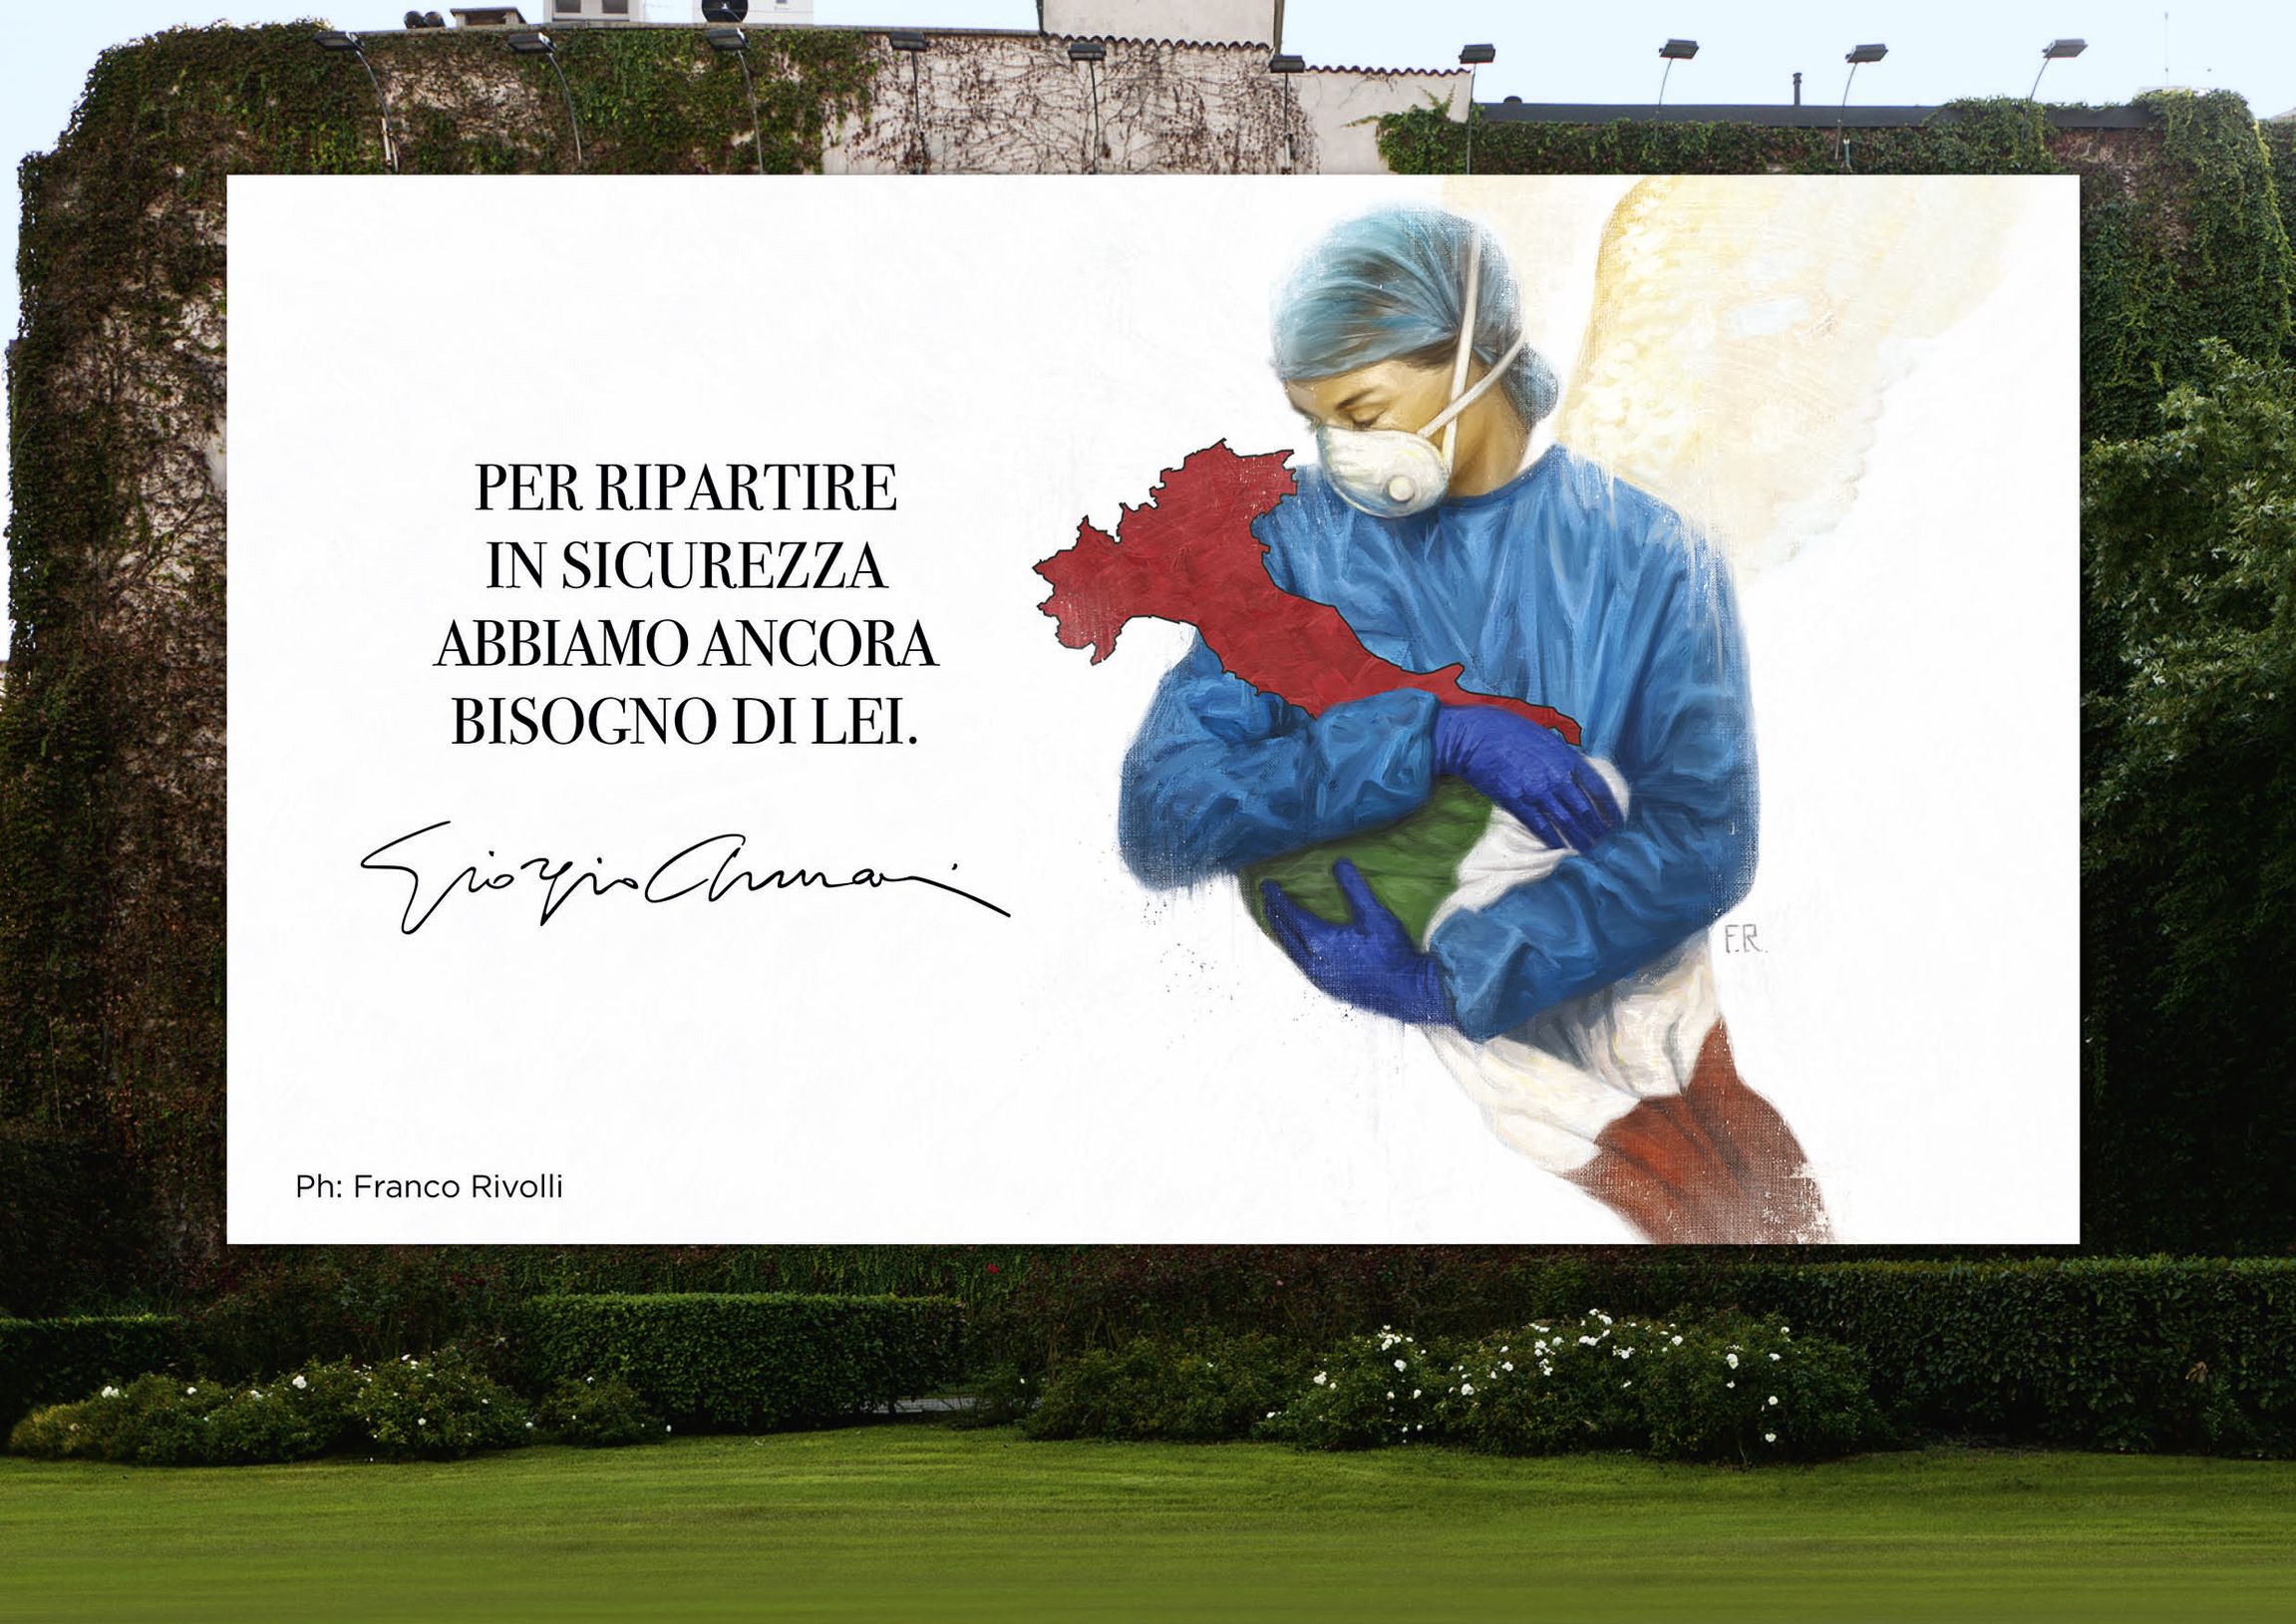 Brunello Cucinelli Announces Project in Support of Mankind — Brunello  Cucinelli Will Donate Excess Clothes